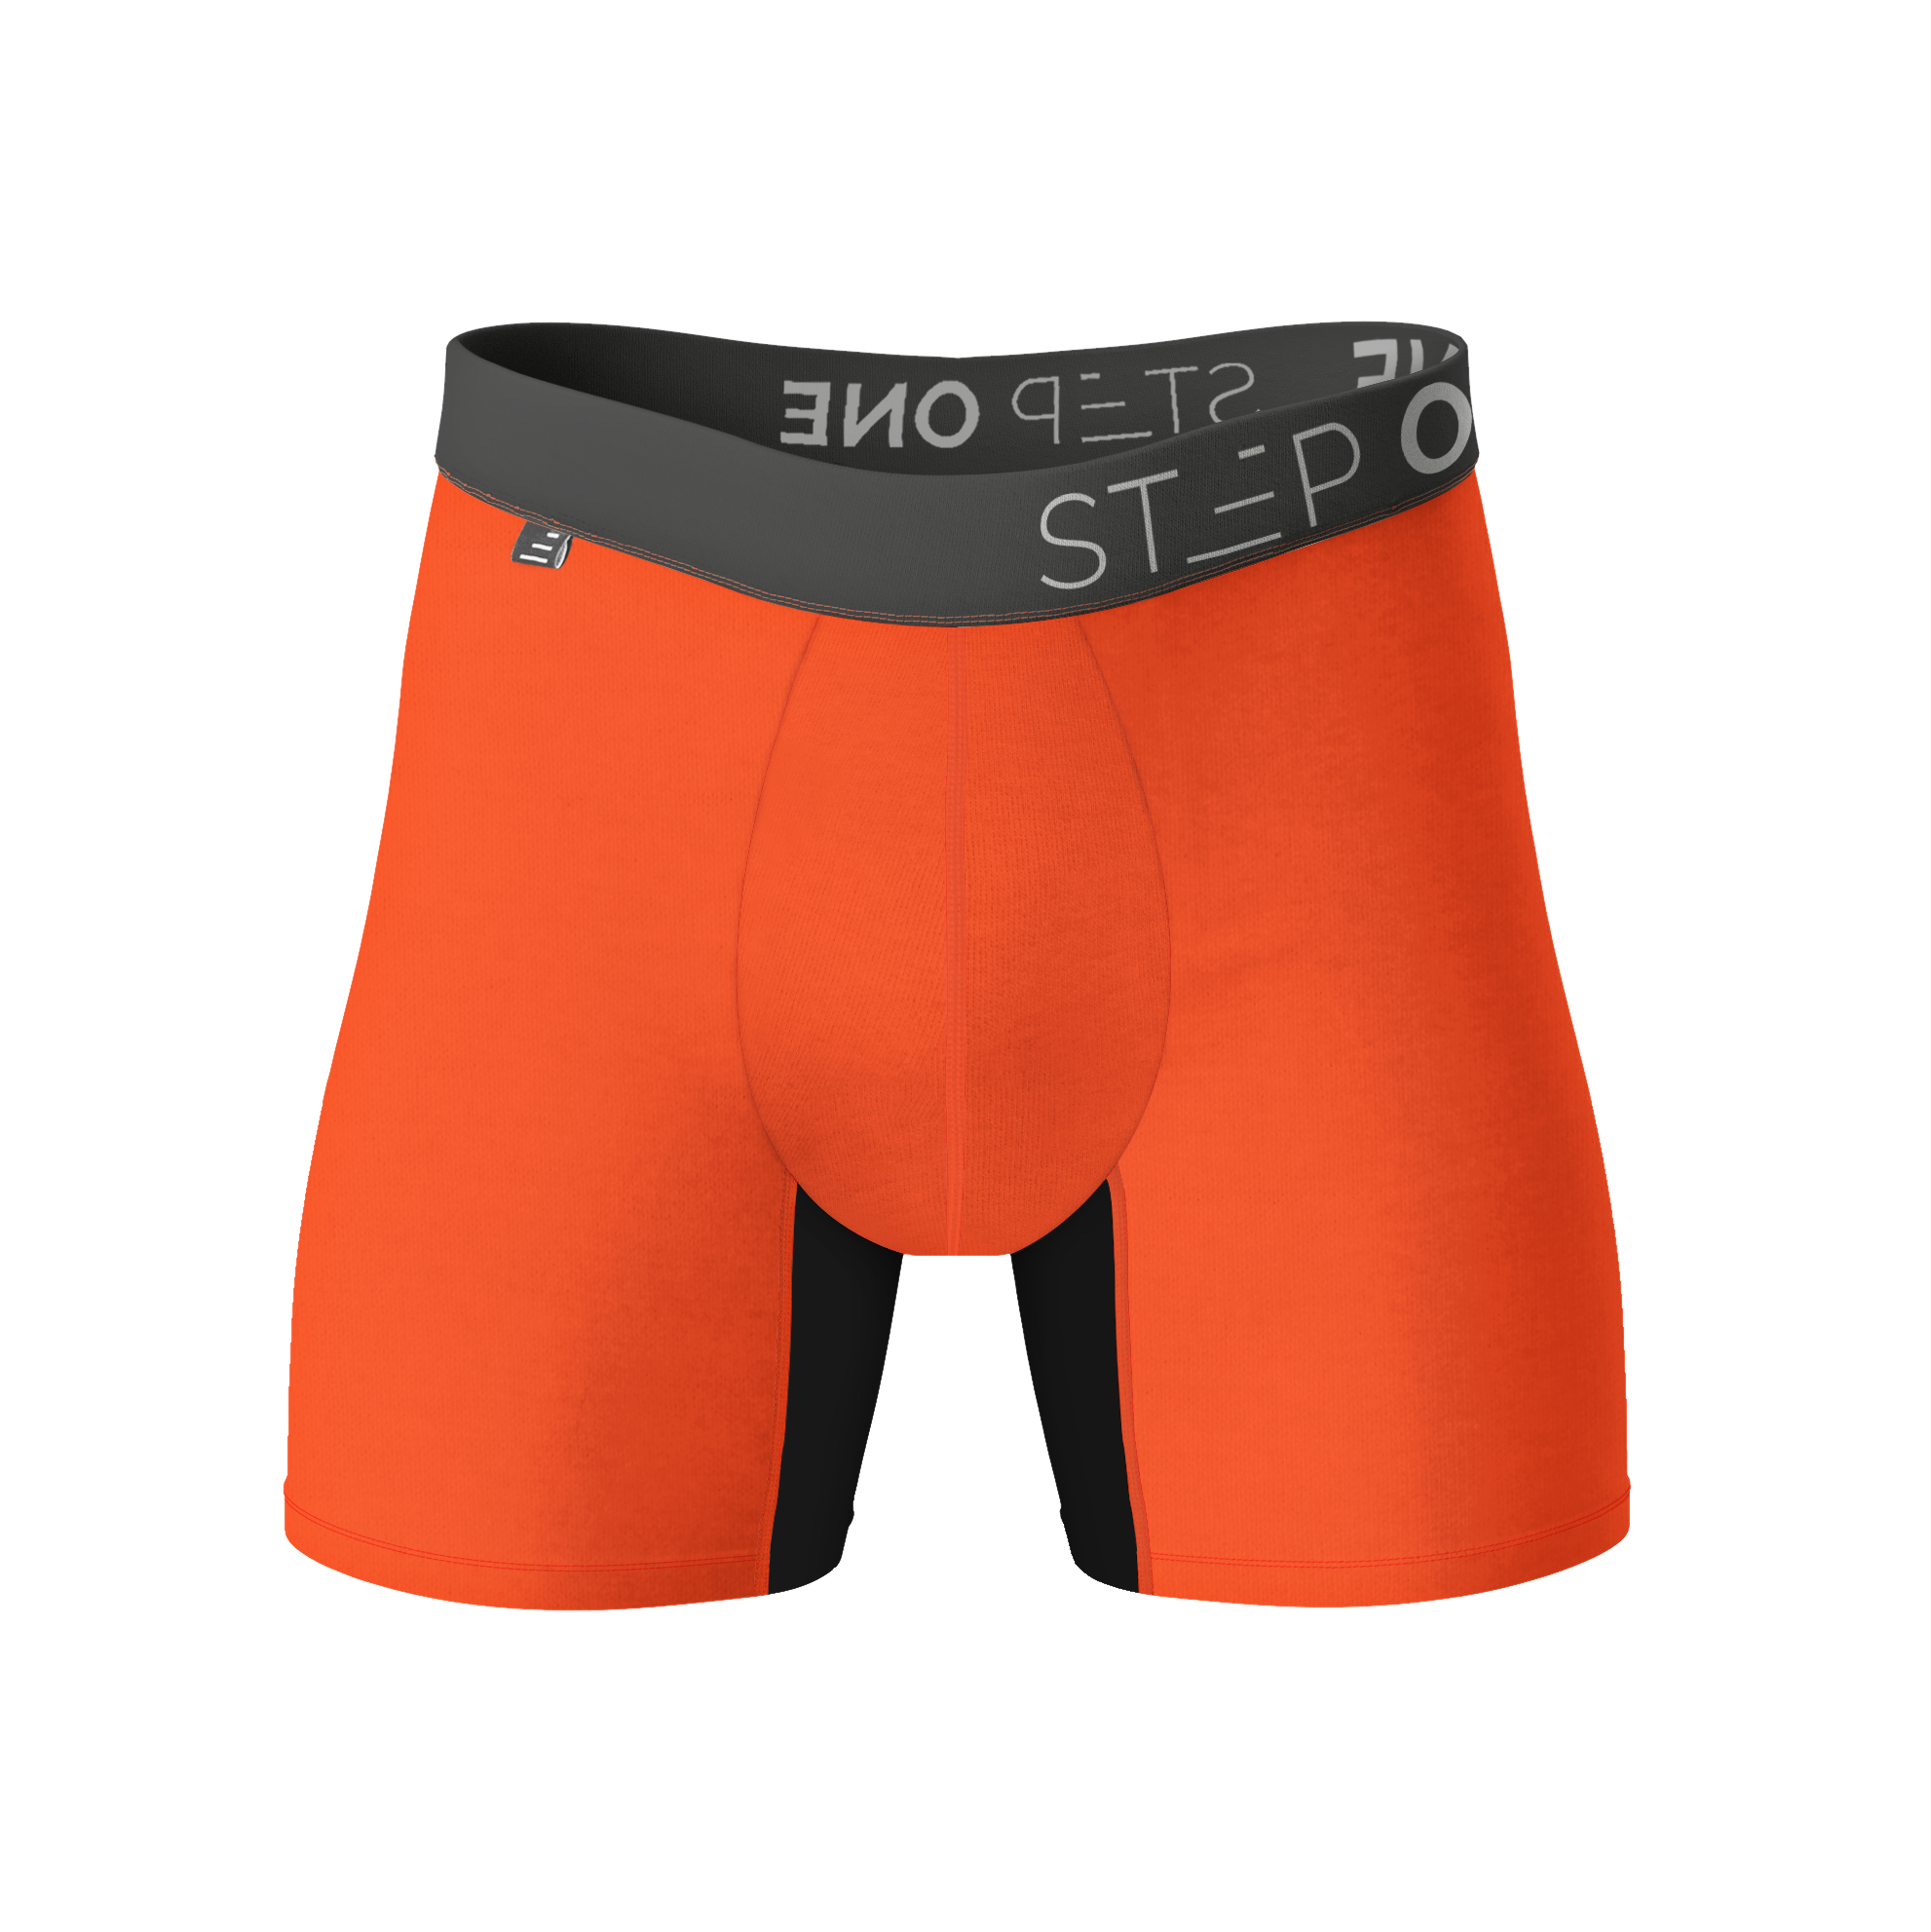 Boxer Brief - Smashed Avo  Step One Men's Underwear US